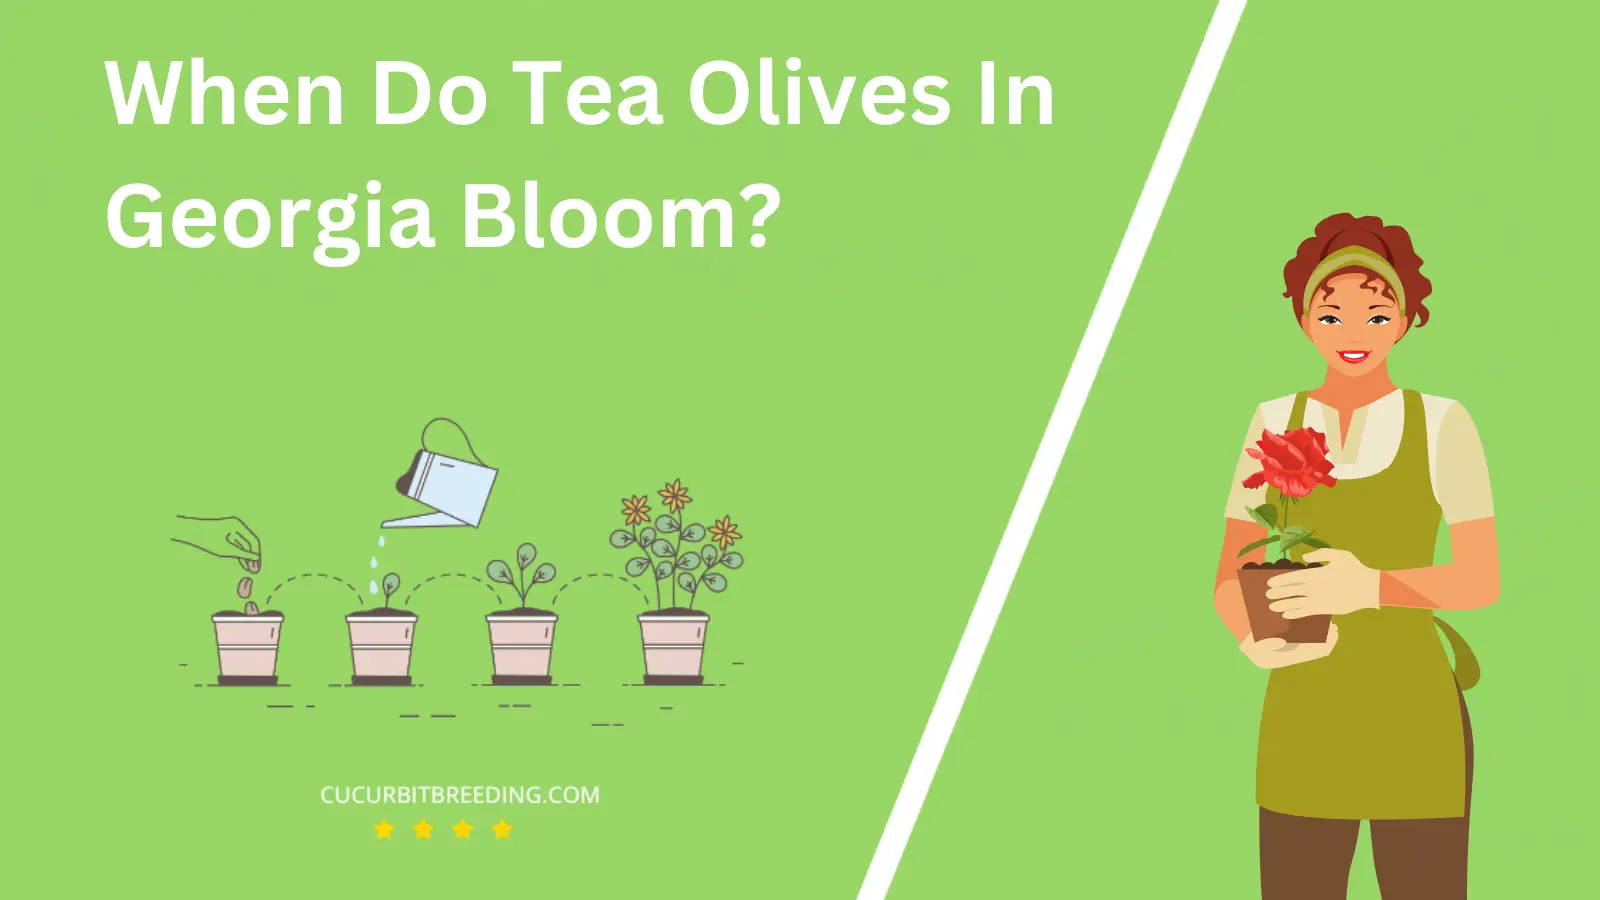 When Do Tea Olives In Georgia Bloom?